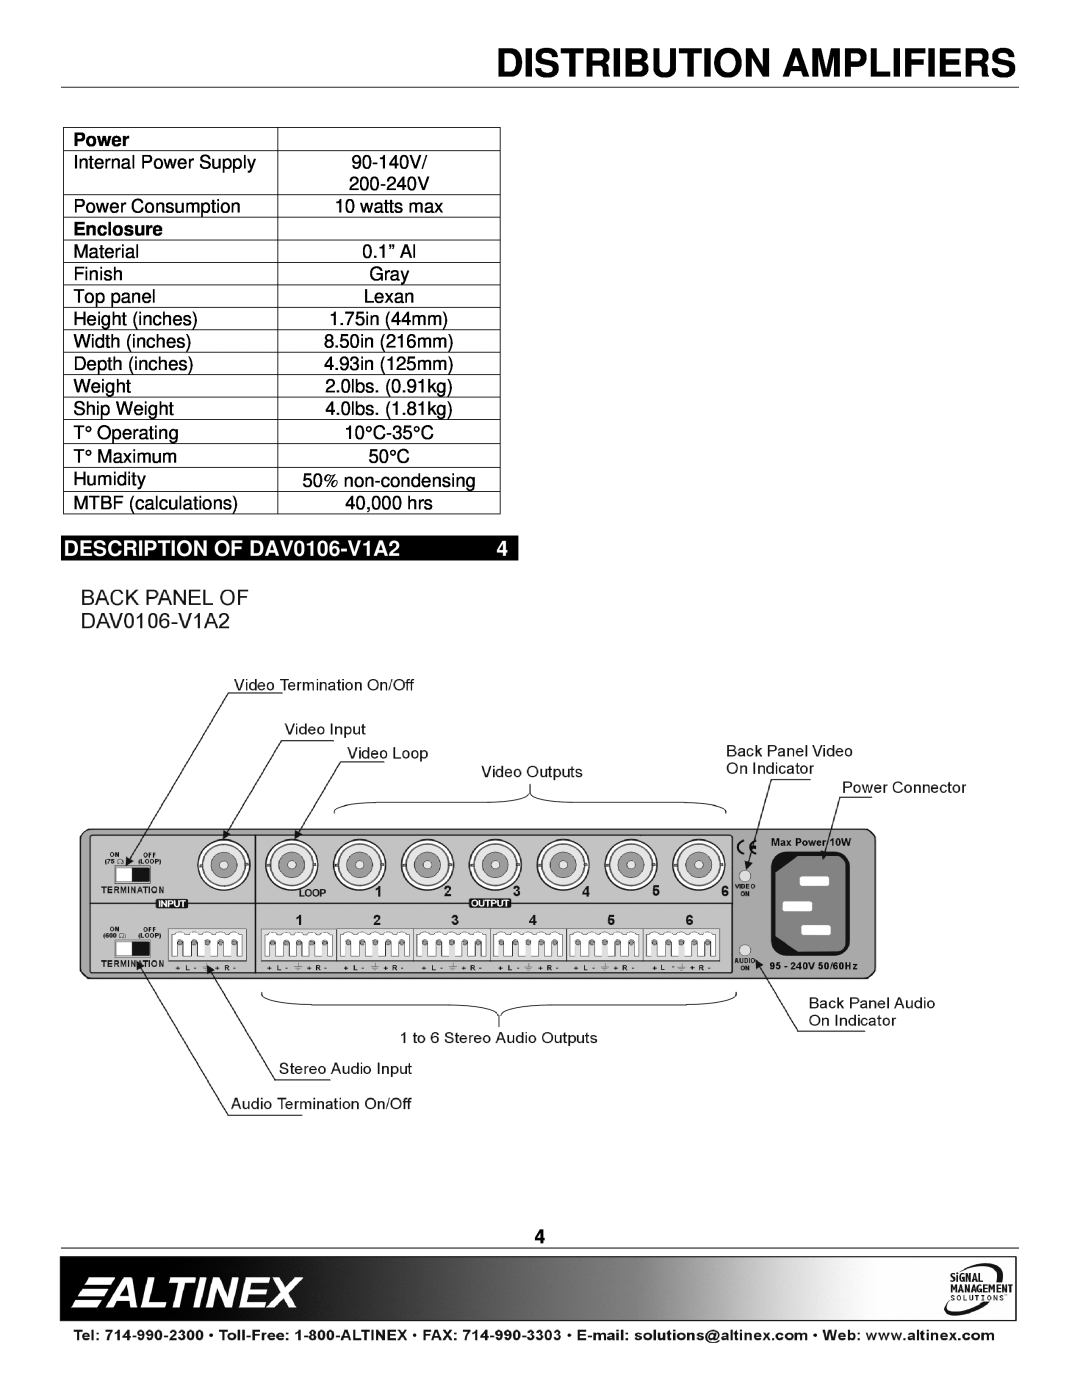 Altinex DESCRIPTION OF DAV0106-V1A2, Distribution Amplifiers, Internal Power Supply Power Consumption, Enclosure 